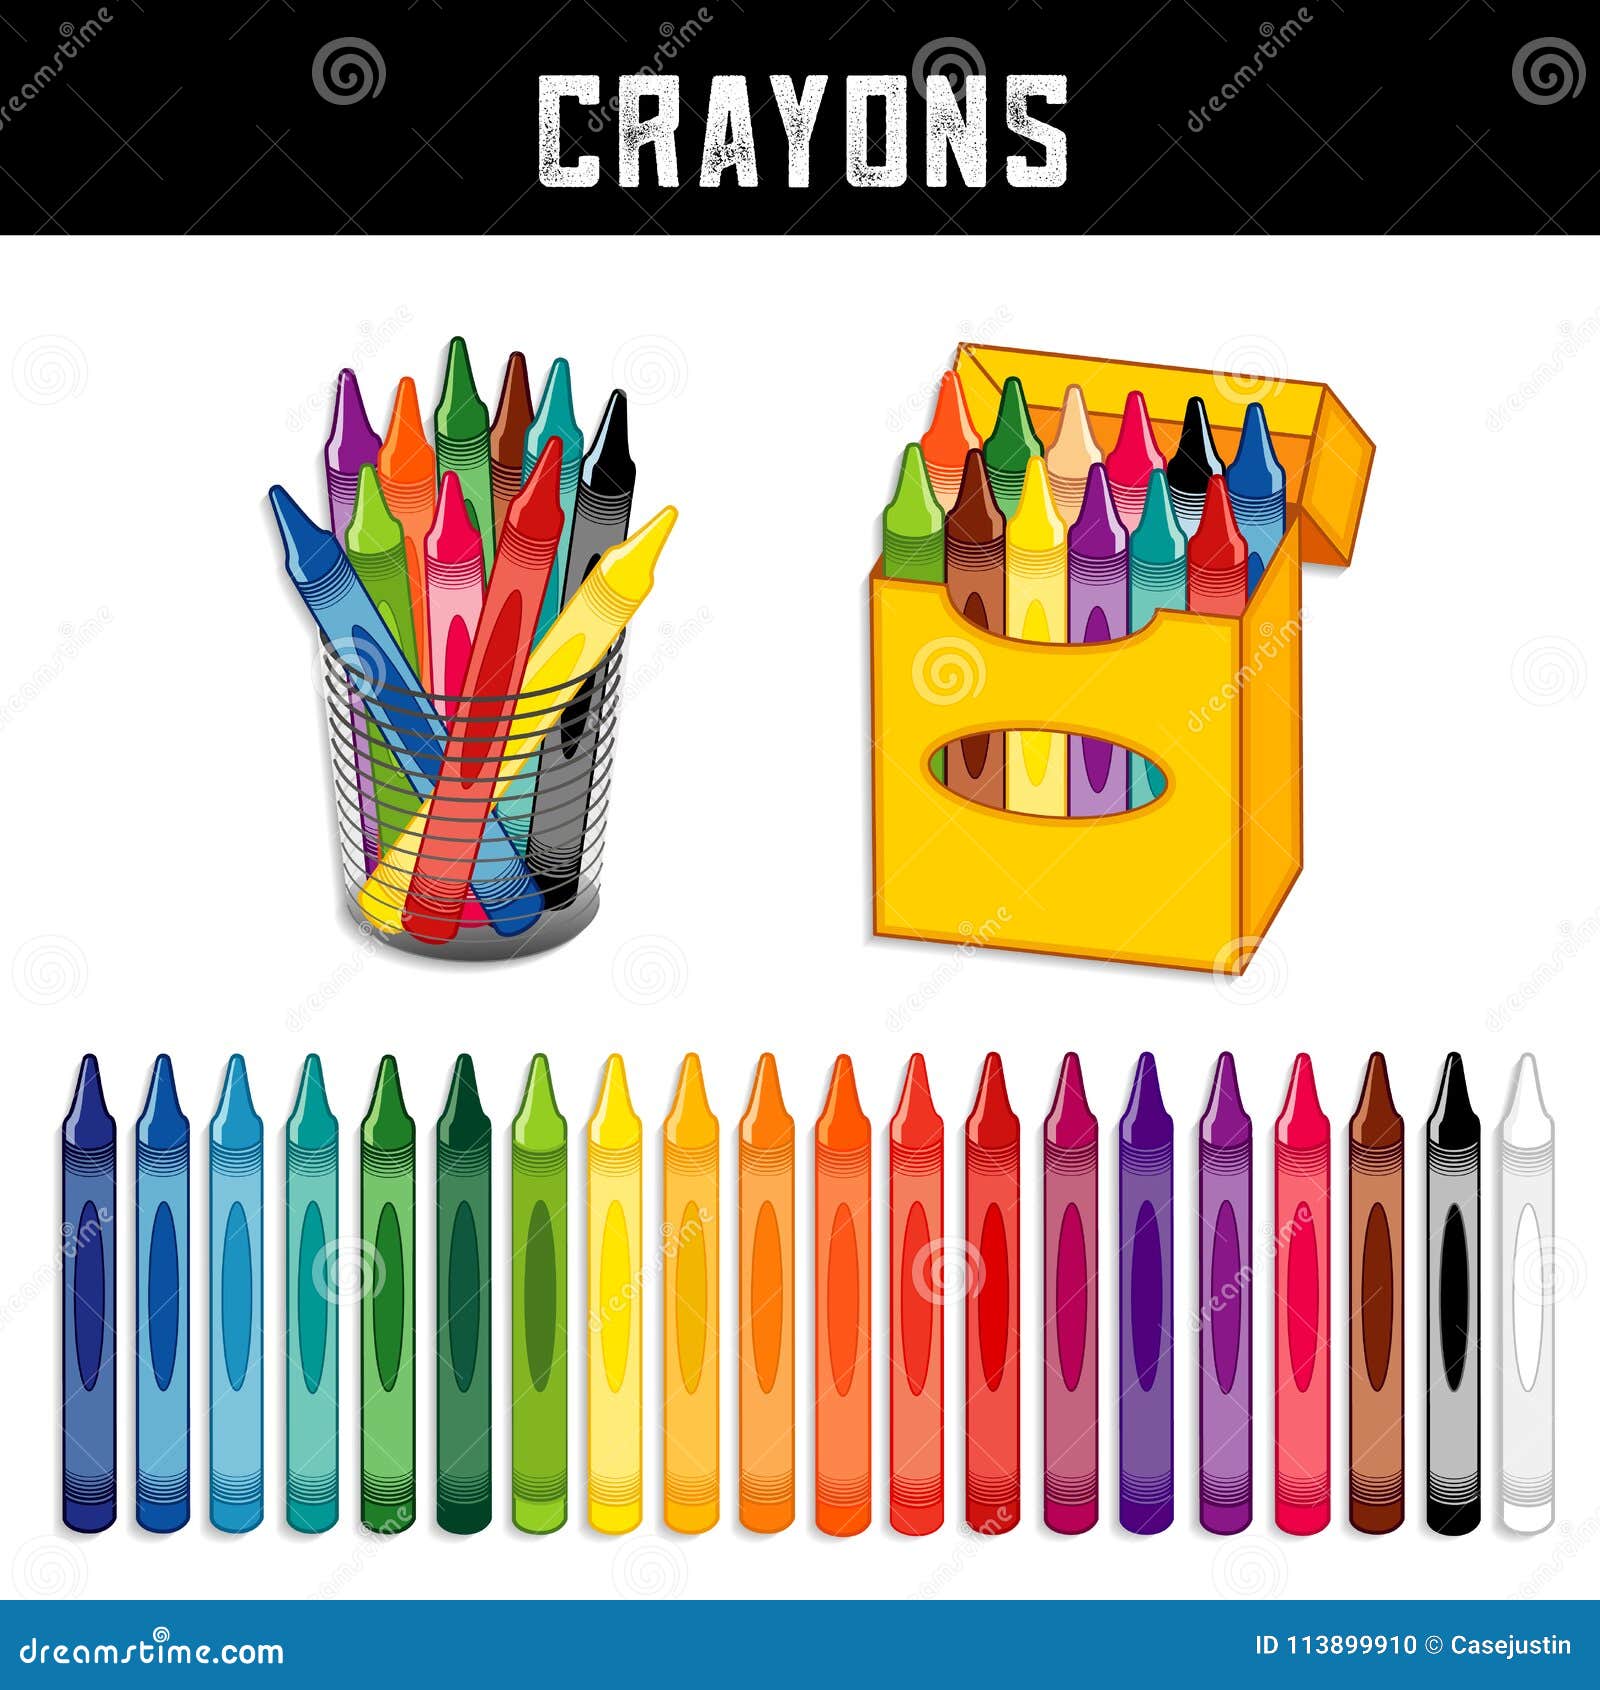 crayons collection, twenty rainbow colors